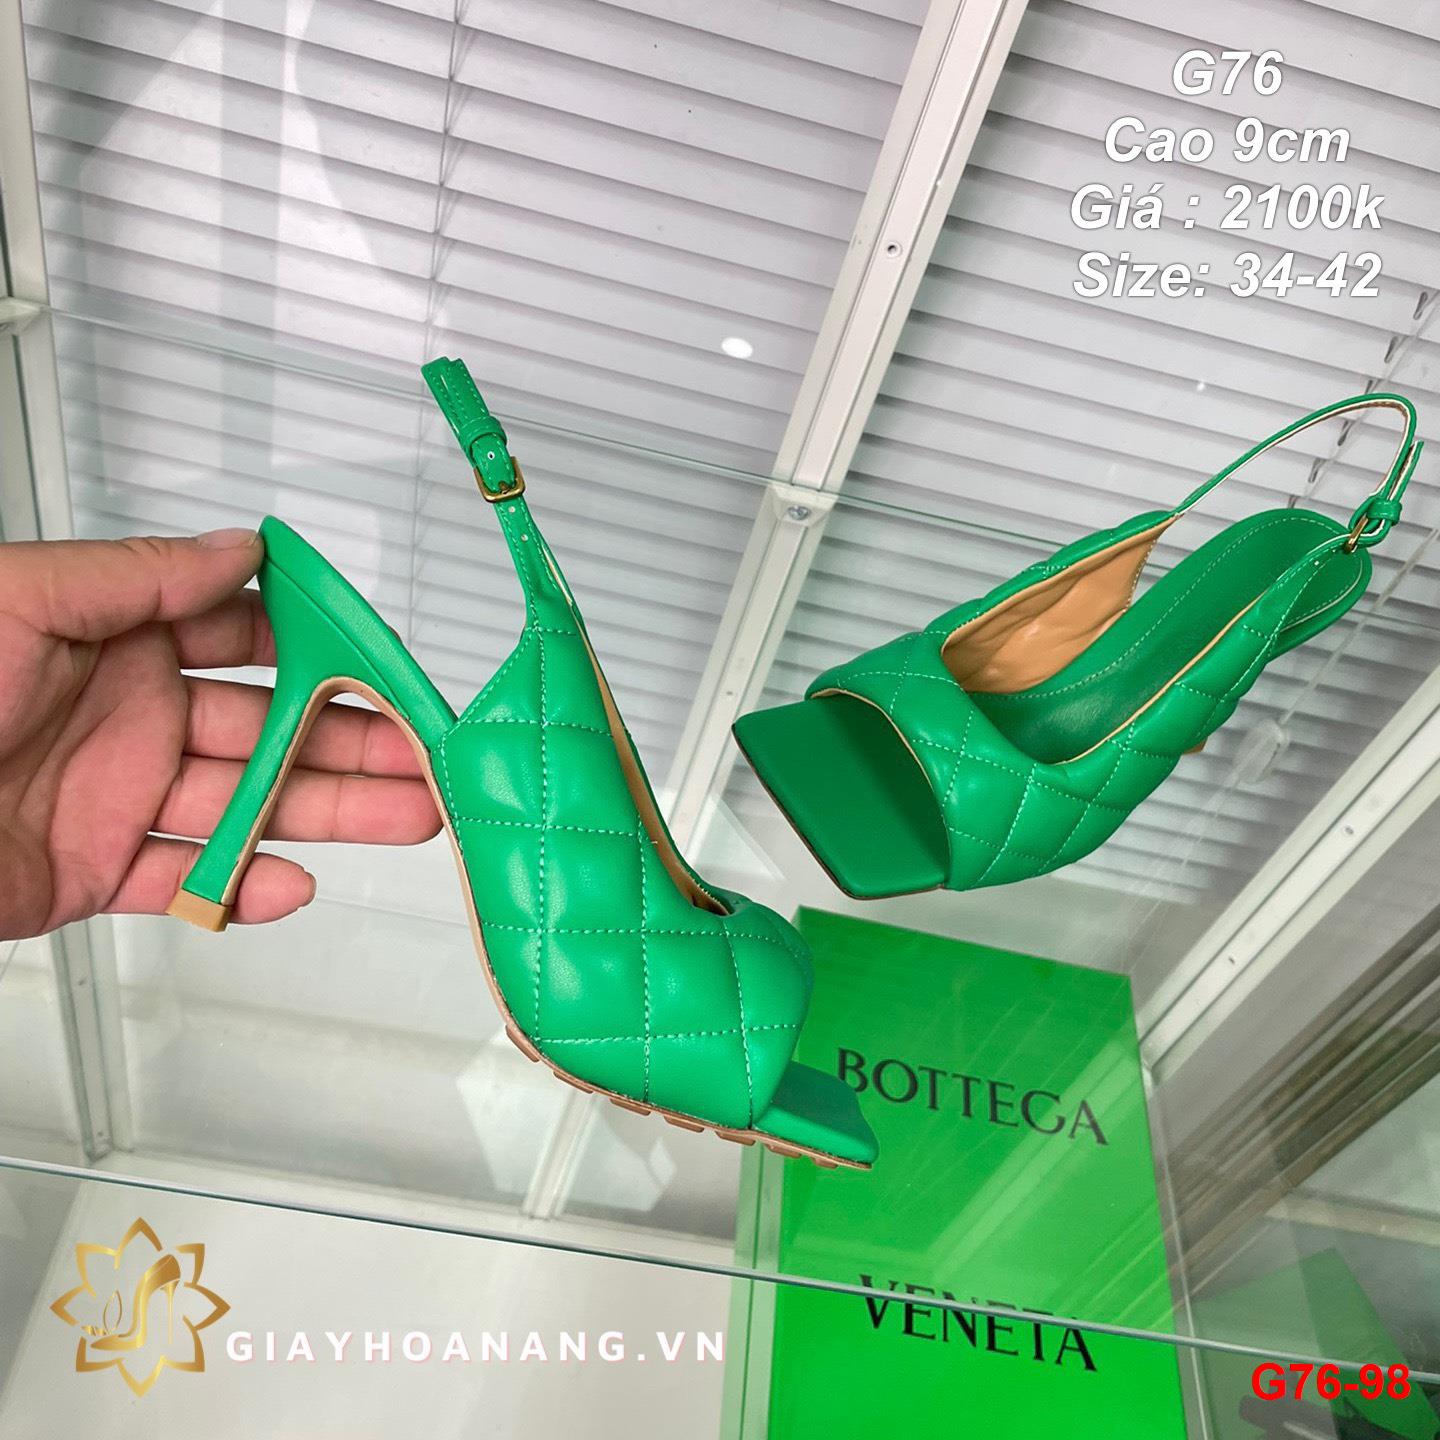 G76-98 Bottega Veneta sandal cao 9cm siêu cấp